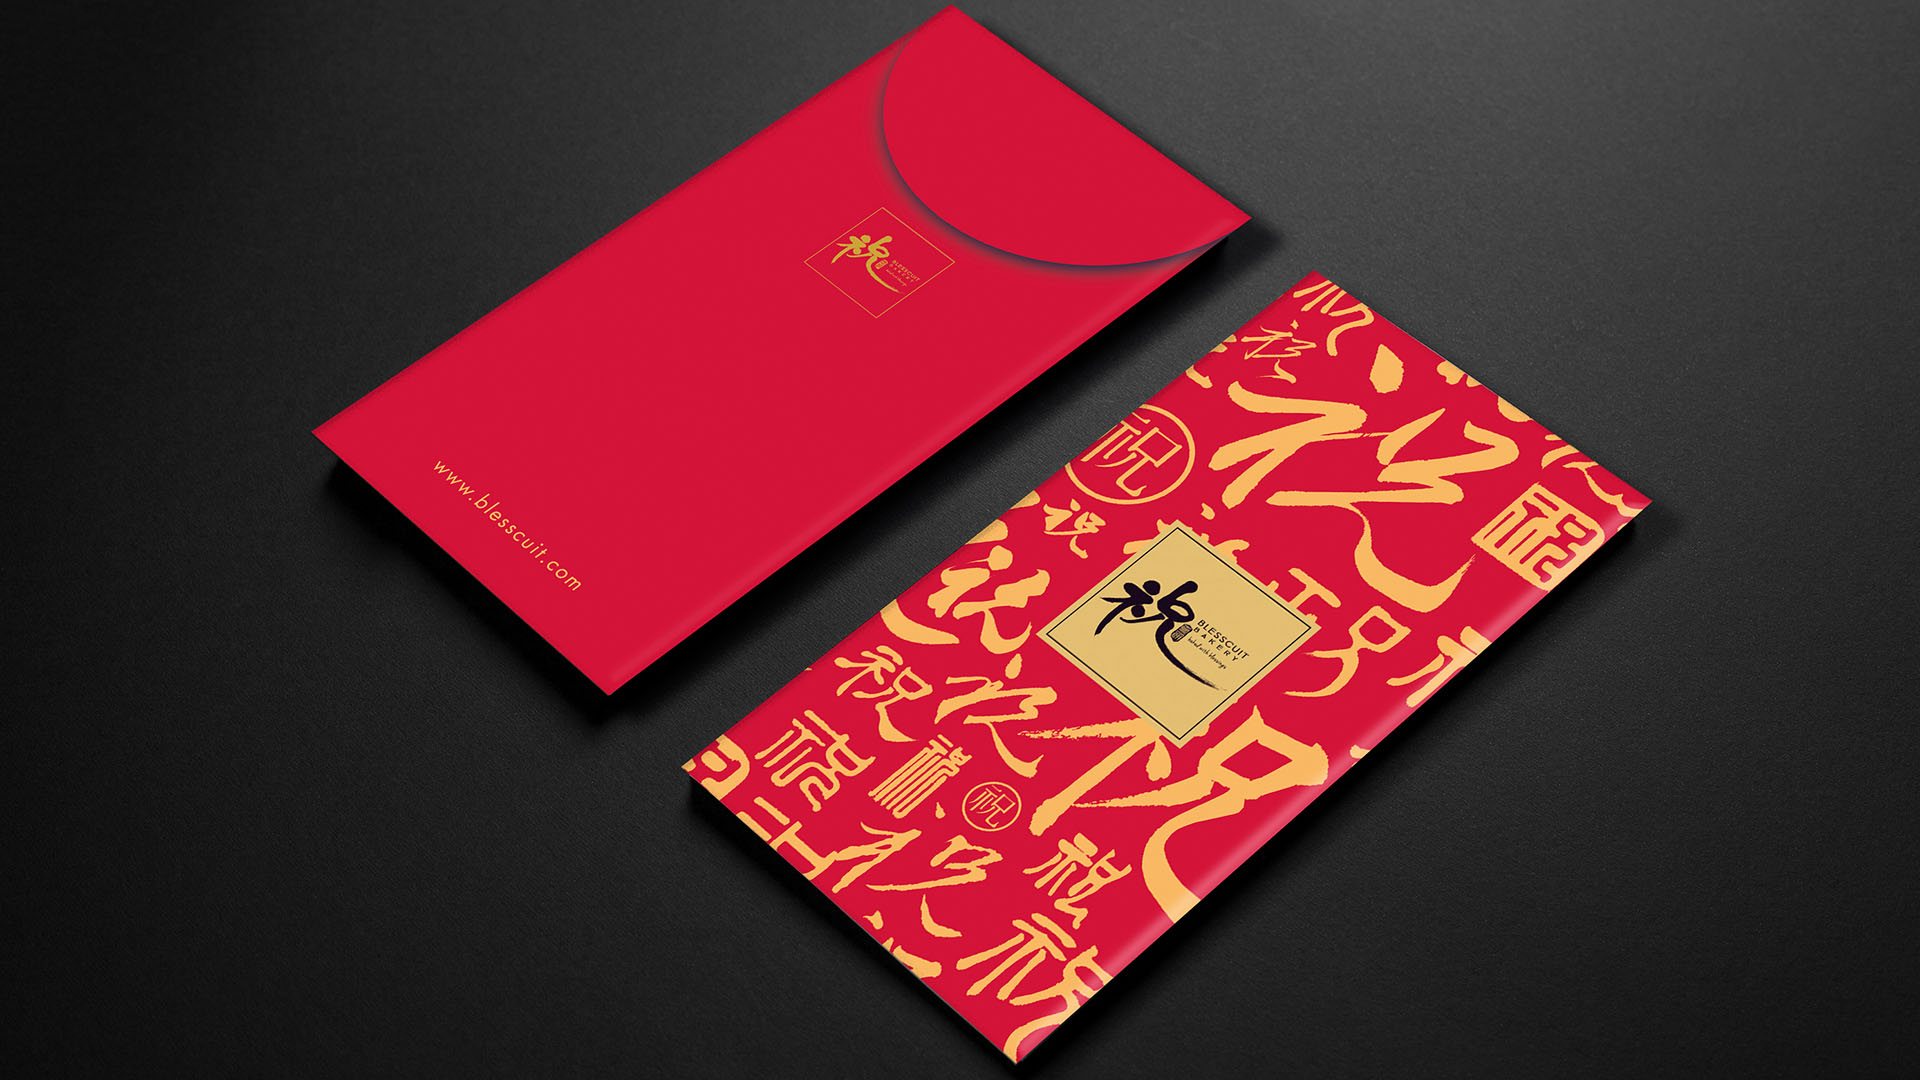 D2 Studio 市场营销策划, 品牌策划与平面设计公司的香港及广州中国团队为cookies brand安排平面设计与企业杂志设计packaging design and gift design 1